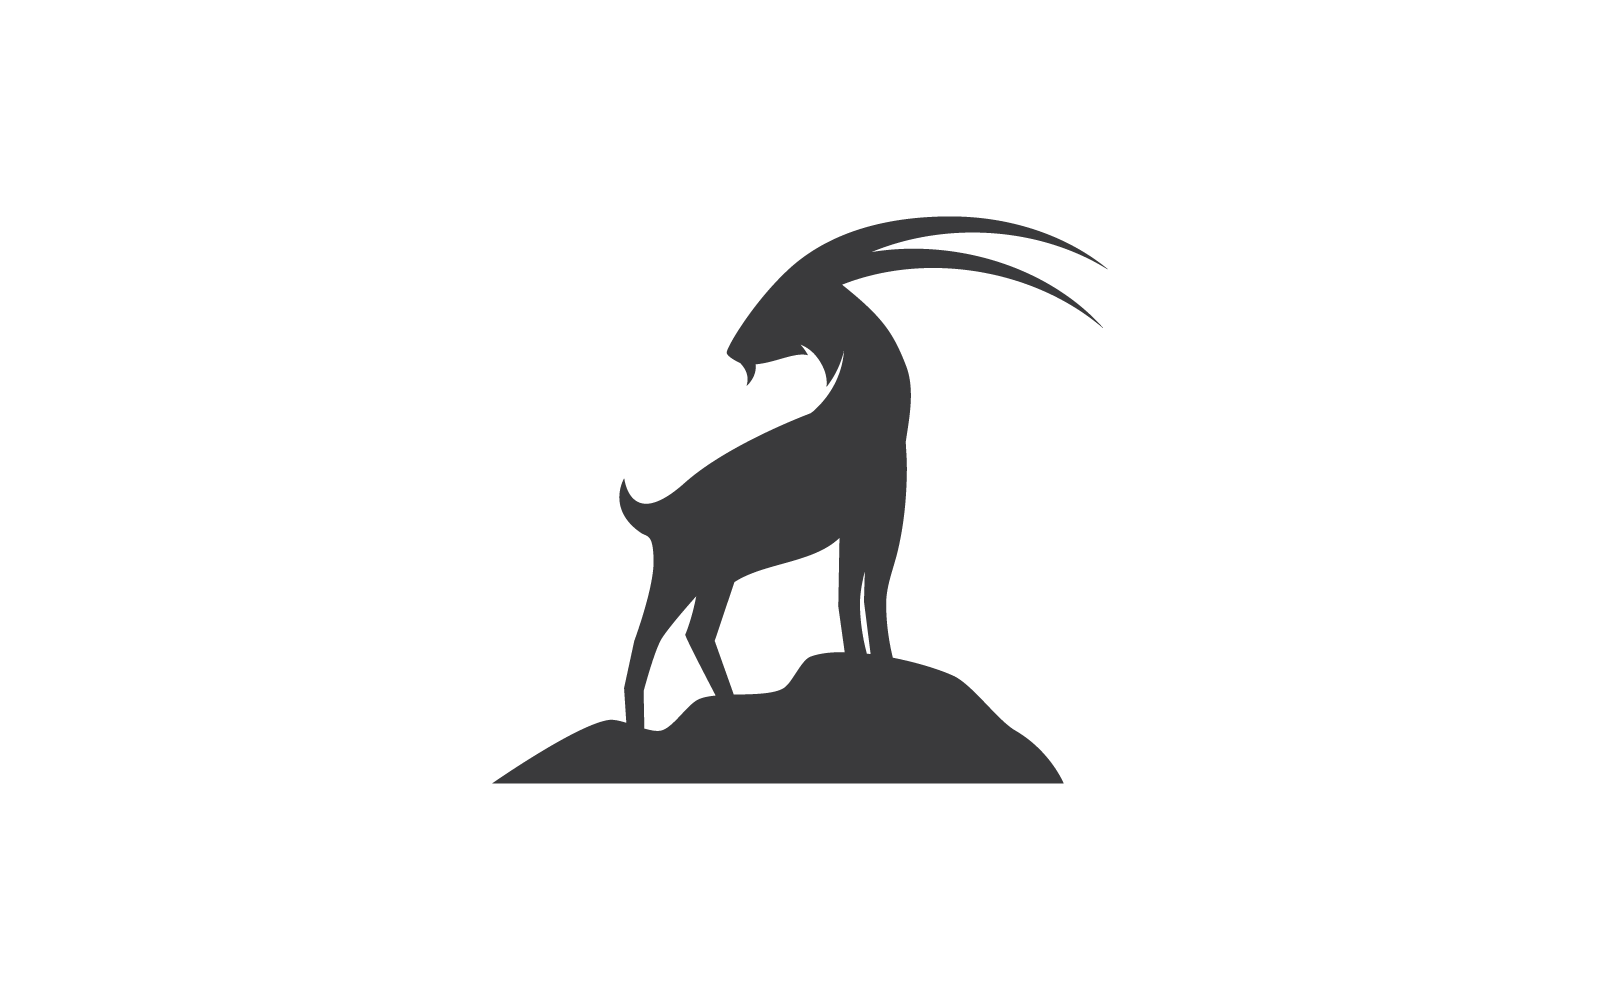 Goat and sheep illustration logo design vector